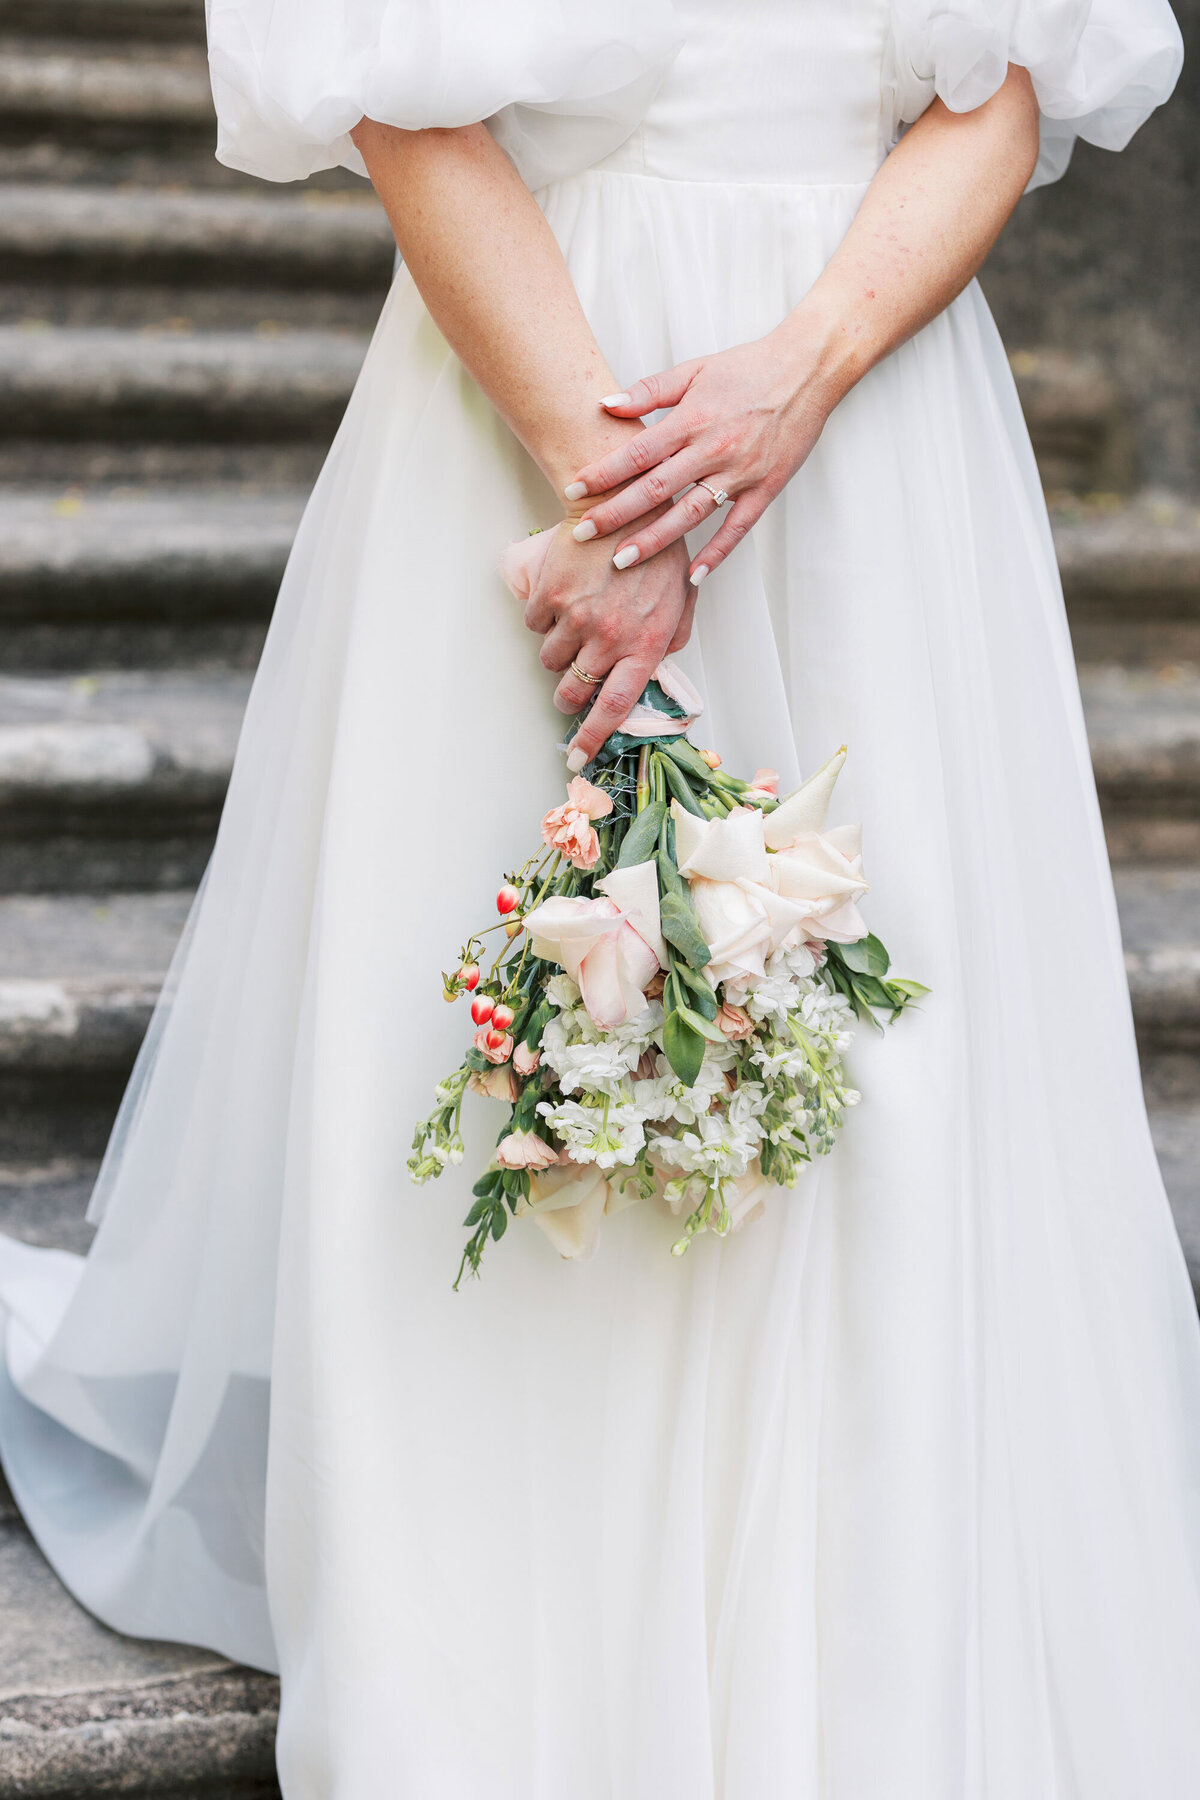 detail of bride's bouquet against her dress